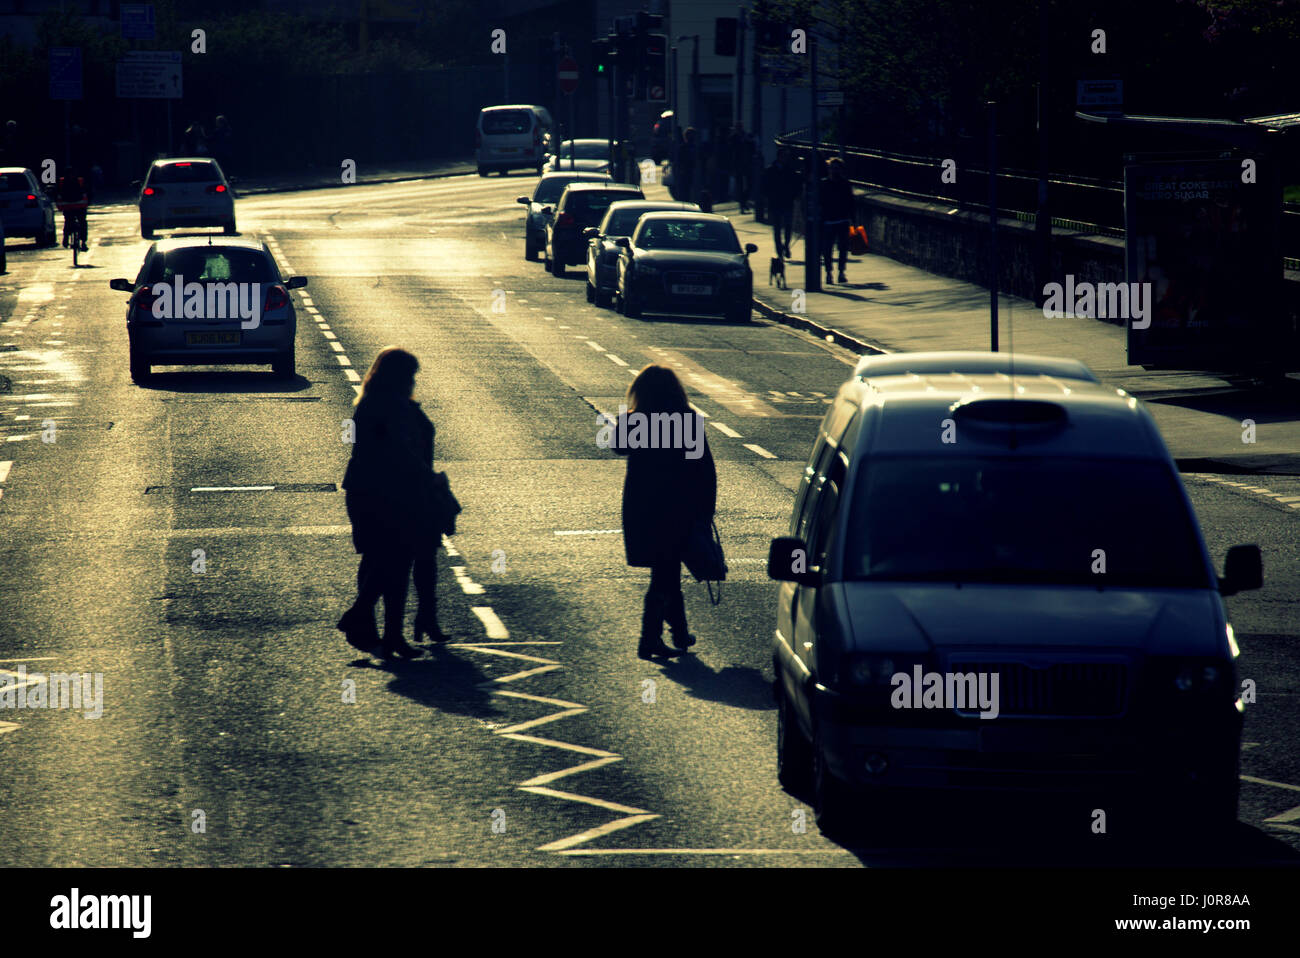 jaywalking women jaywalkers on duke street Dennistoun Glasgow silhouette middle of road Stock Photo